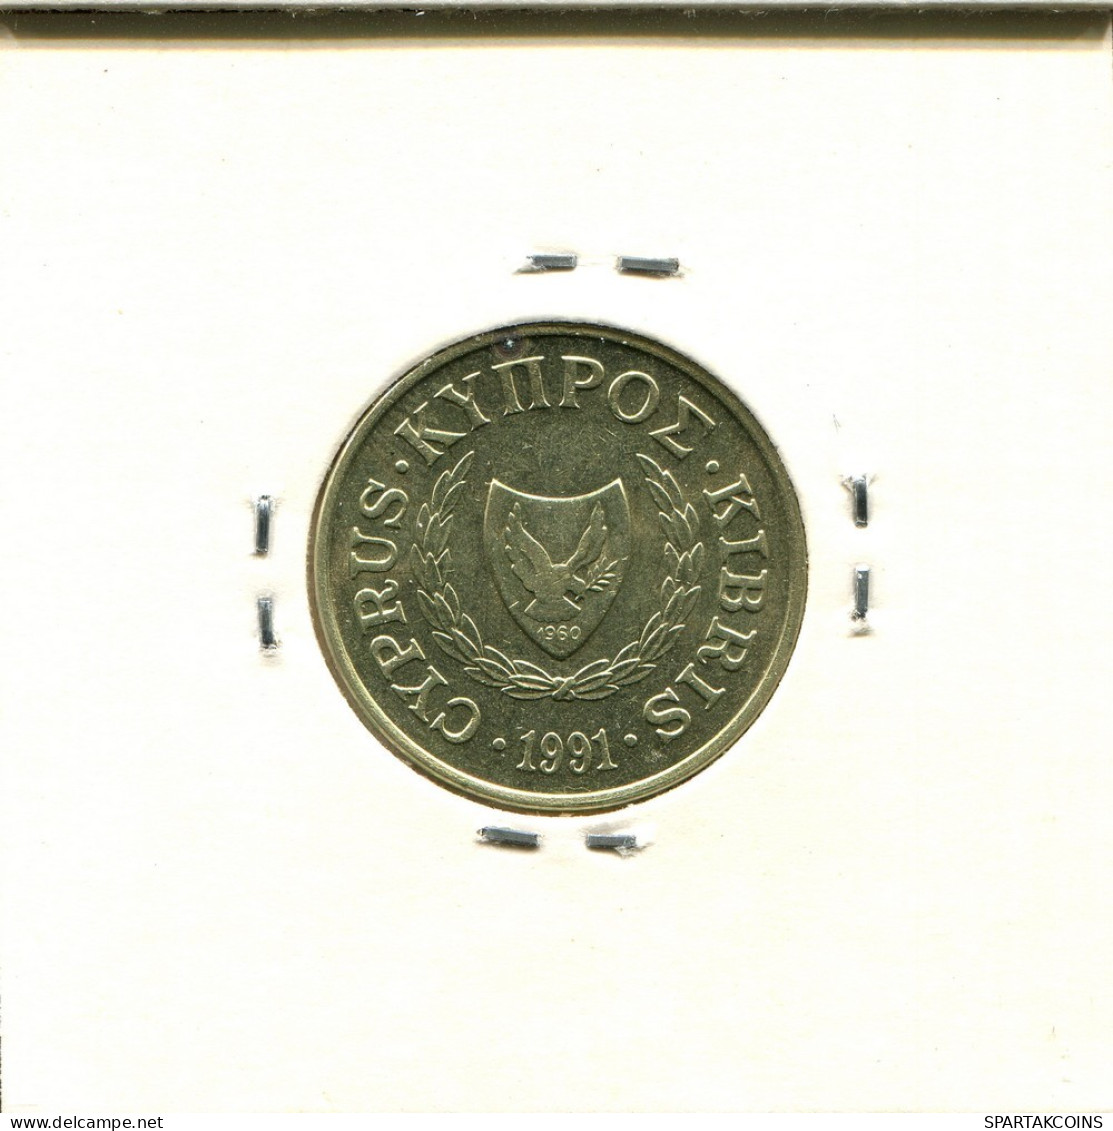 5 CENTS 1991 CHIPRE CYPRUS Moneda #AZ904.E.A - Zypern